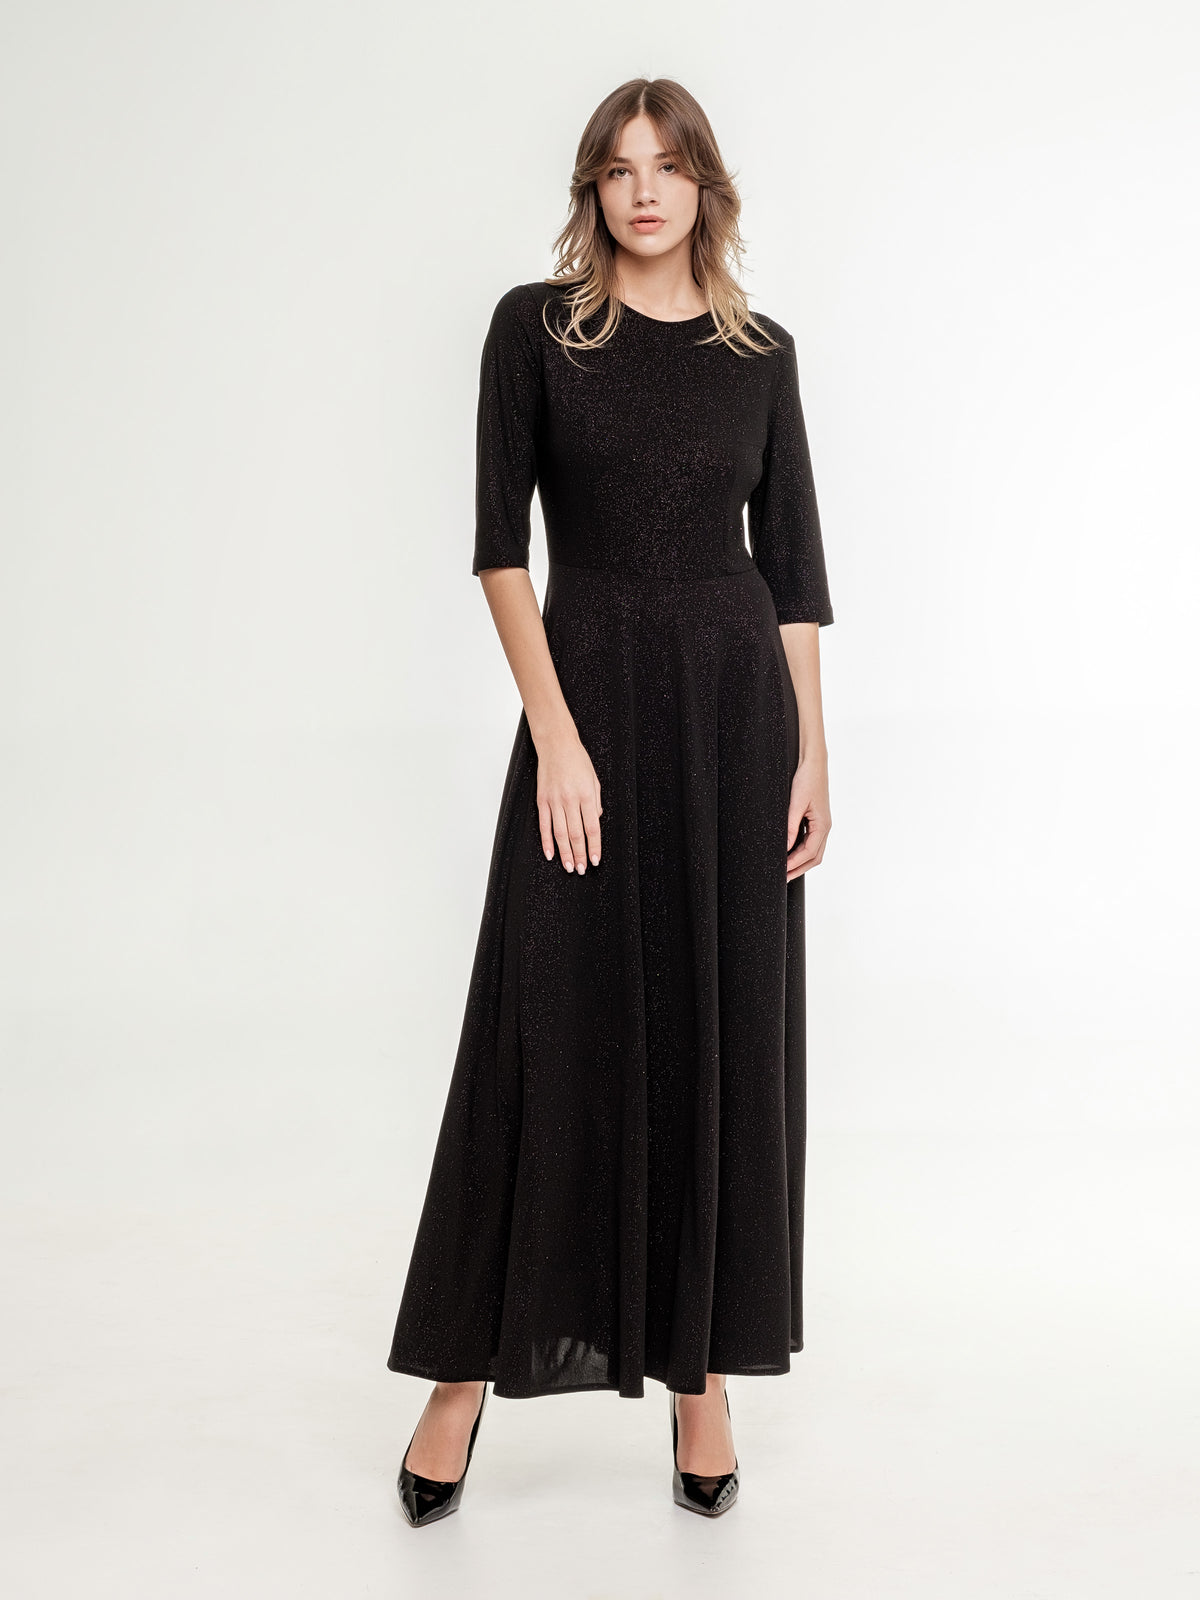 black glossy long dress medium long sleeves wide skirt with underlining 